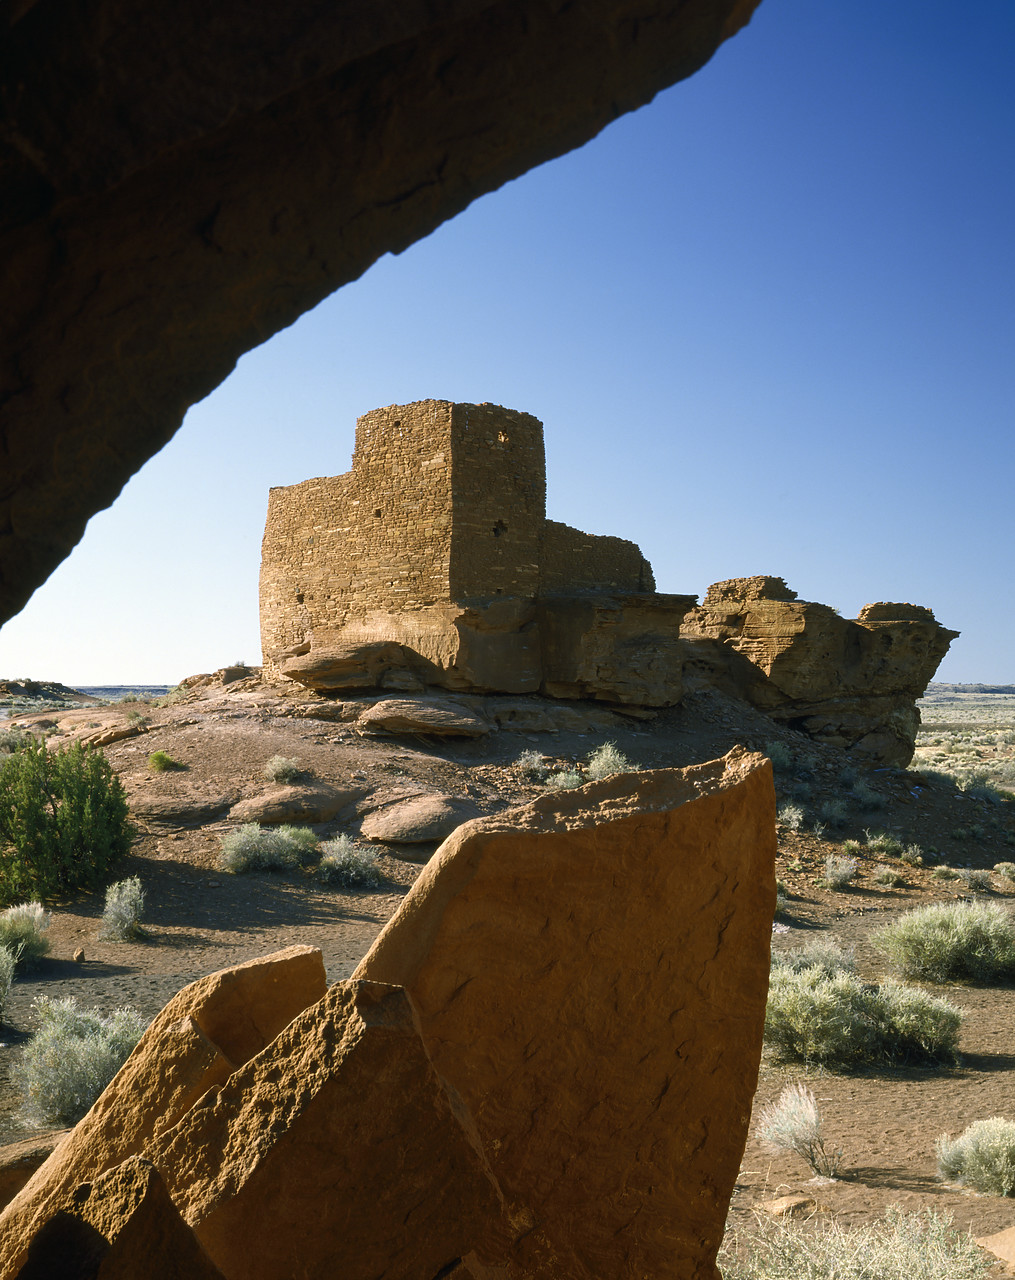 #85278-1 - Wupatki Indian Ruins, near Flagstaff, Arizona, USA